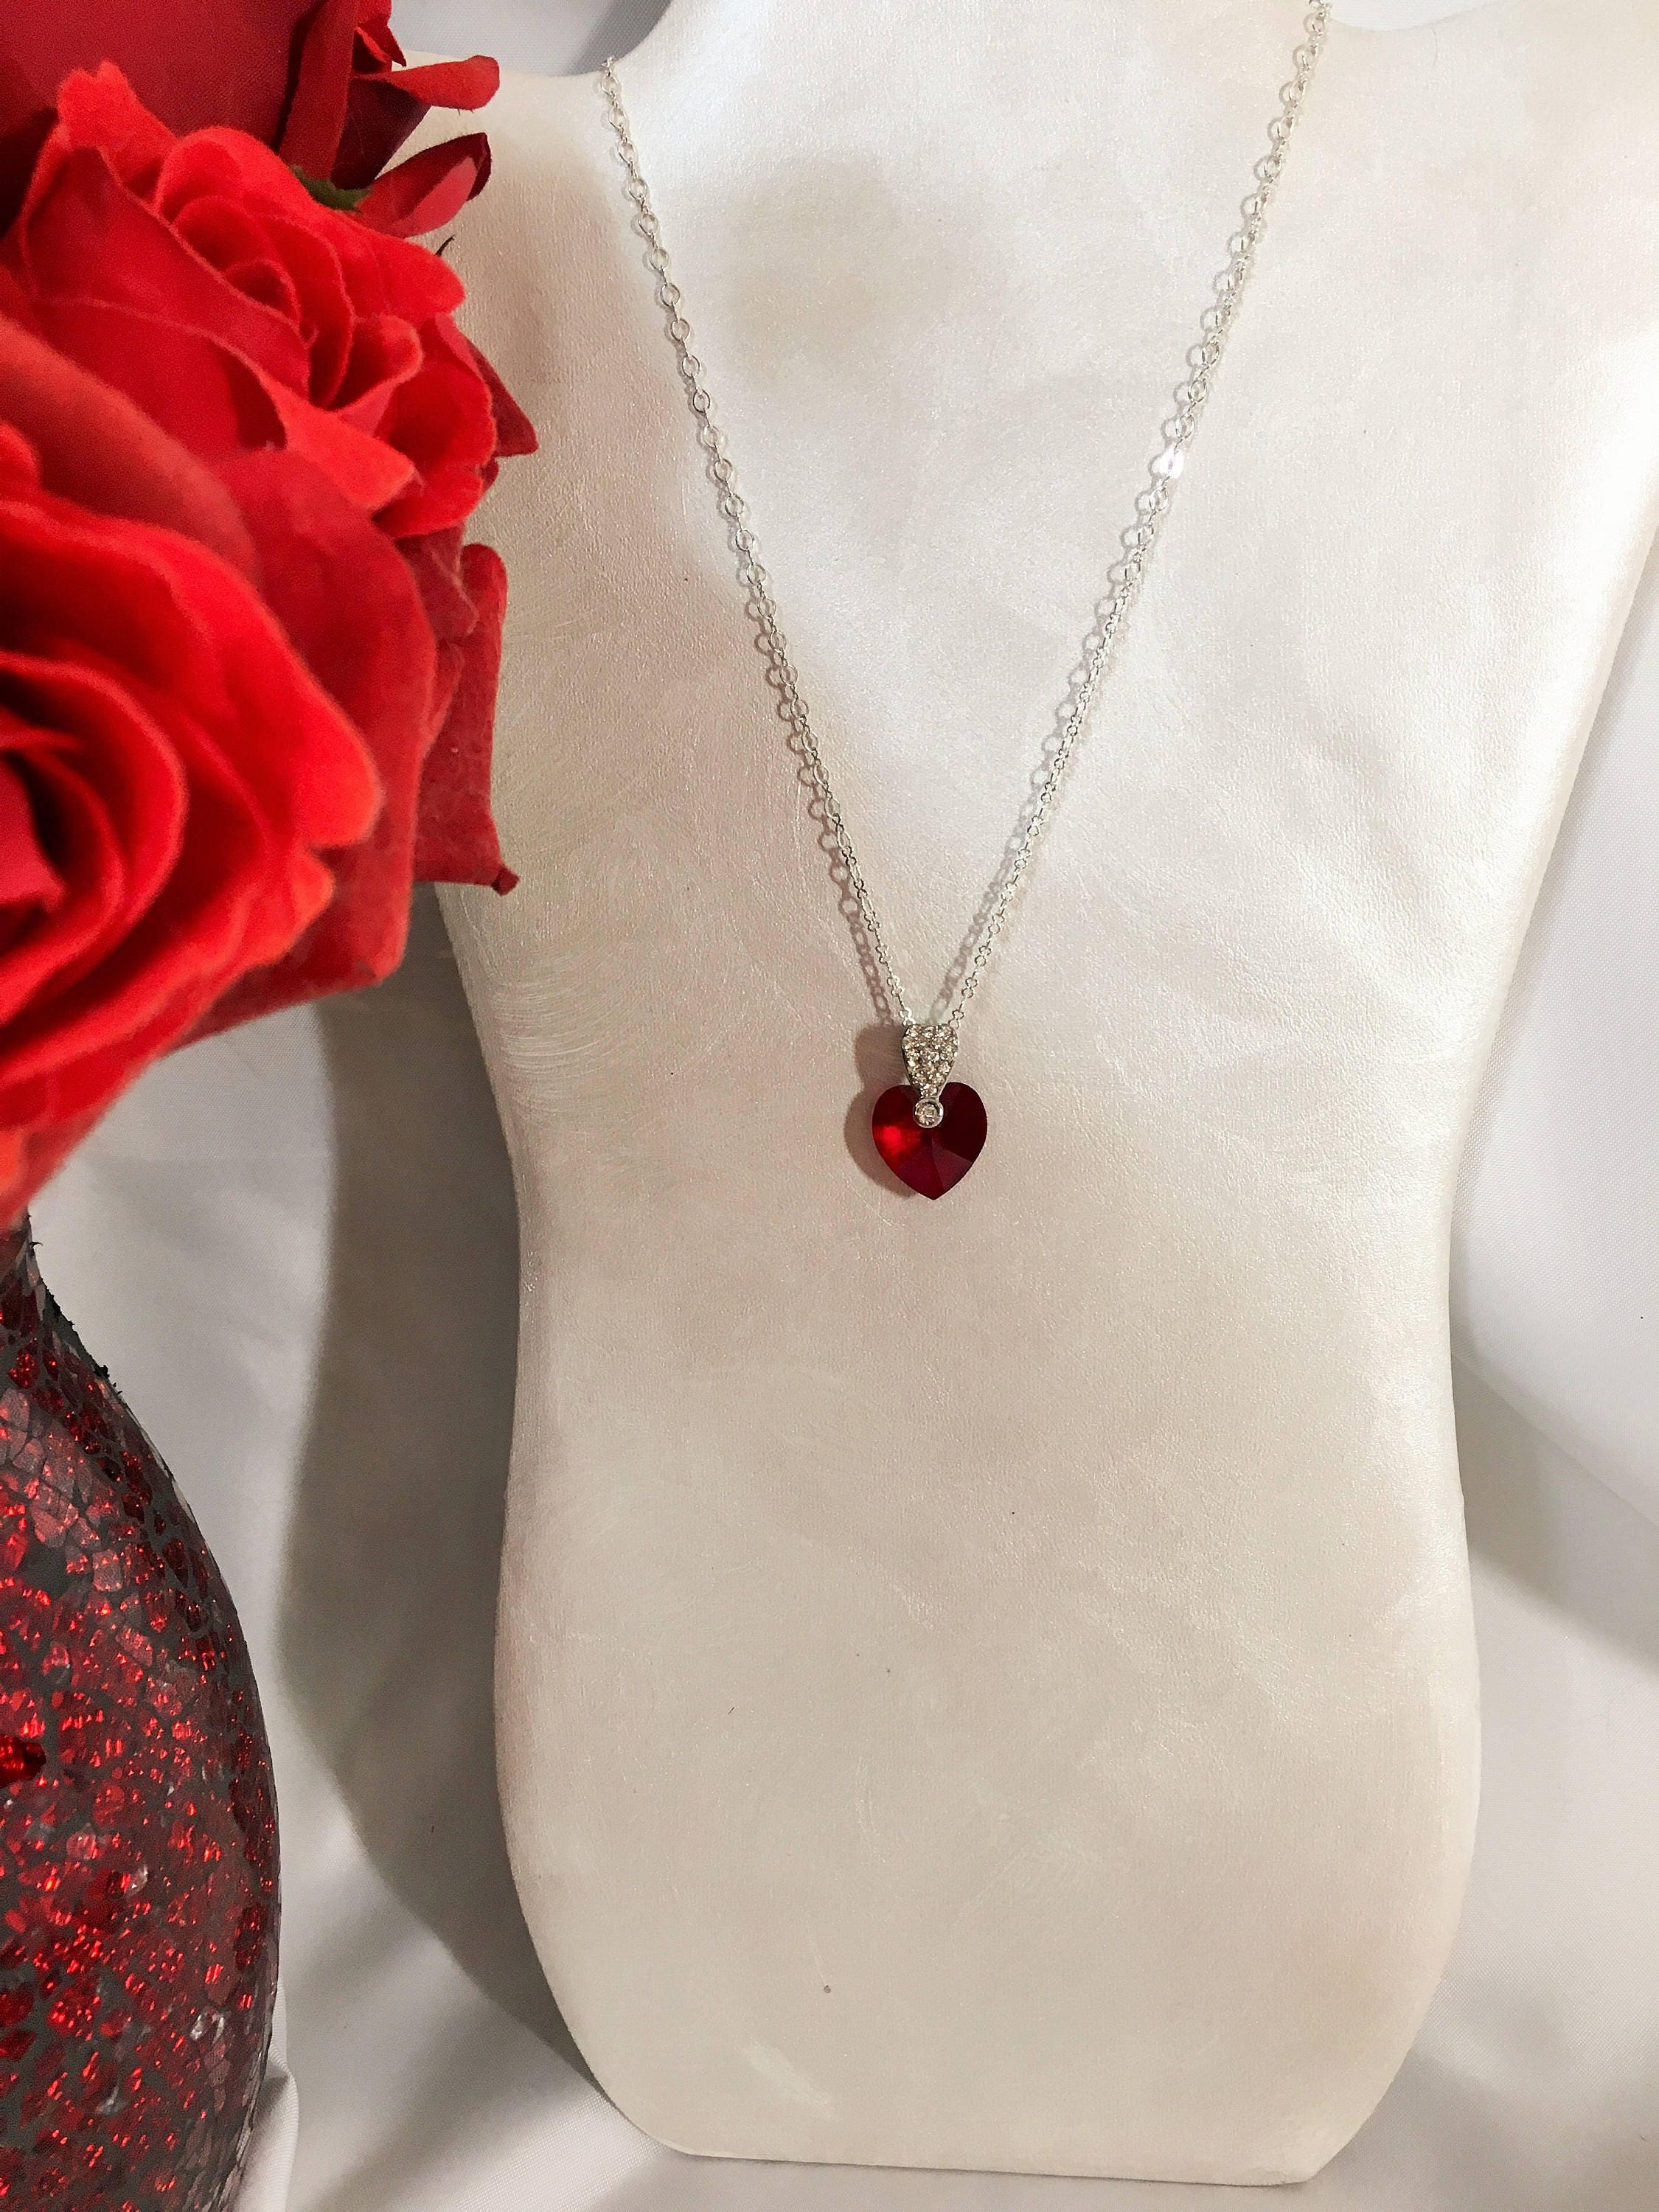 Ruby Red Crystal Heart Charm Swarovski Crystal Heart Bead 17mm Set of 5 0141